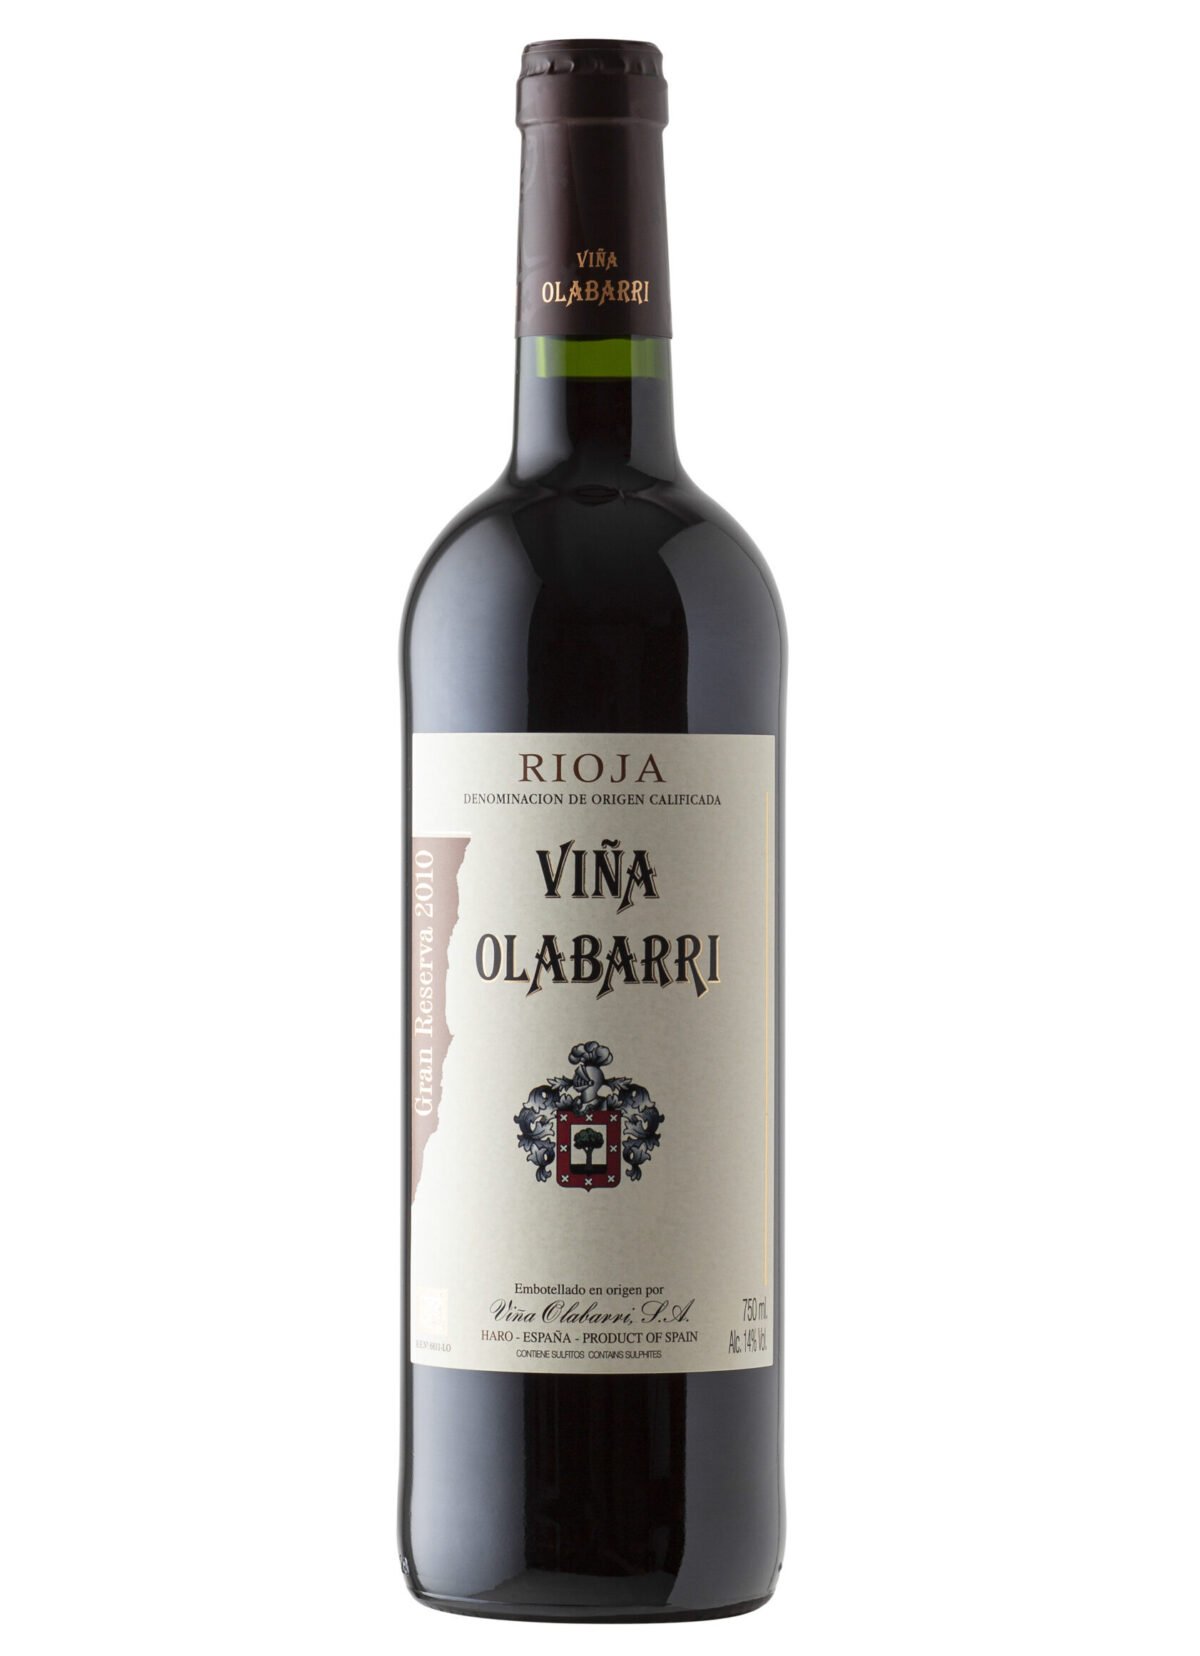 Vina Olabarri wine bottle.